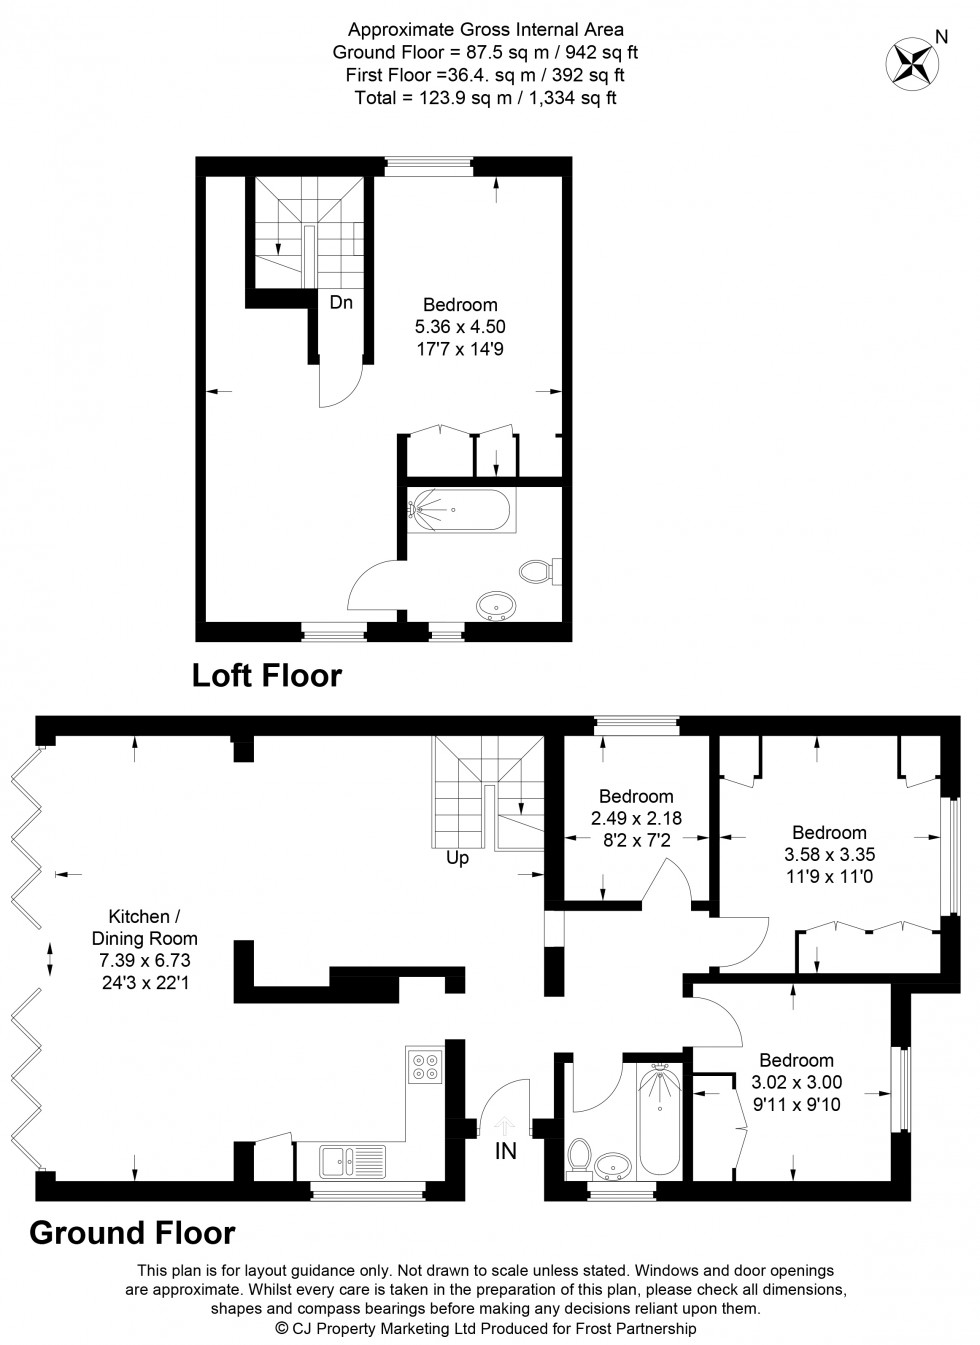 Floorplan for Chalfont St. Peter, Gerrards Cross, SL9